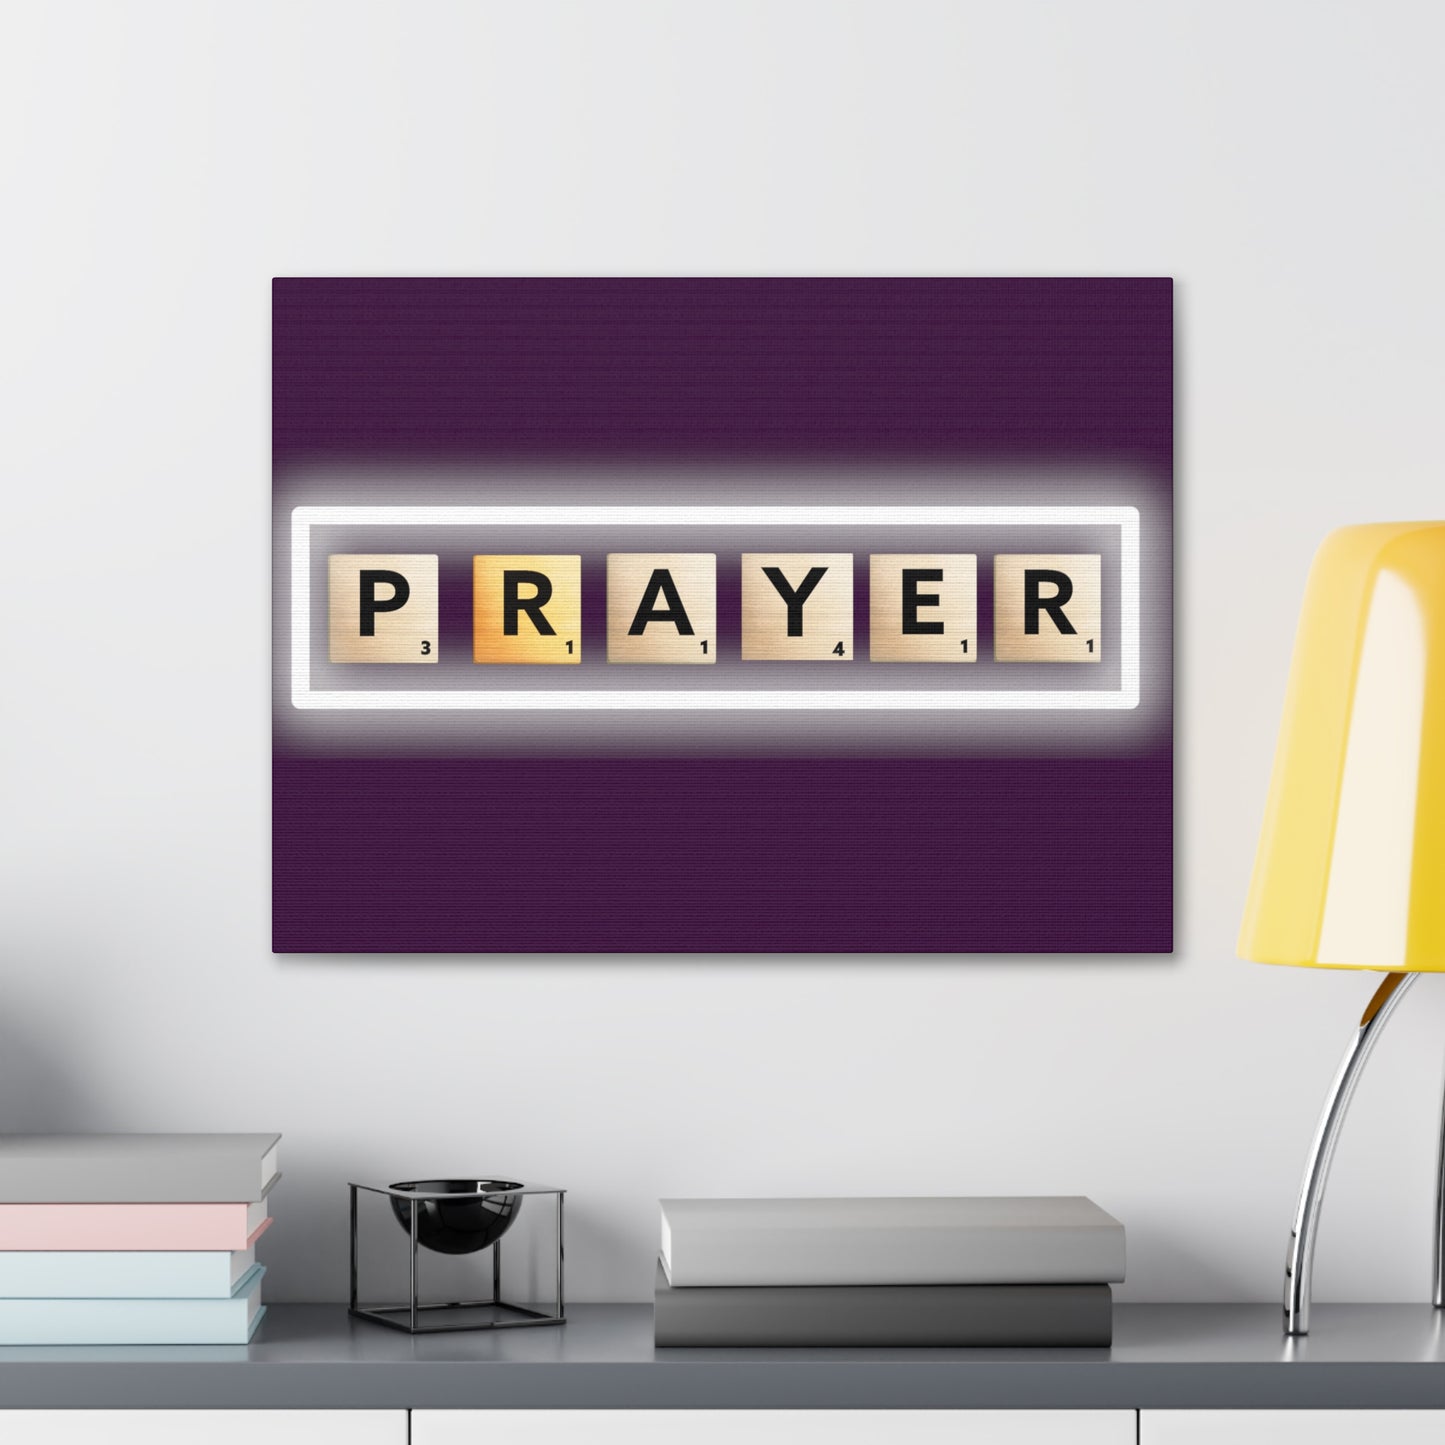 Christian Wall Art: Prayer (Wood Frame Ready to Hang)